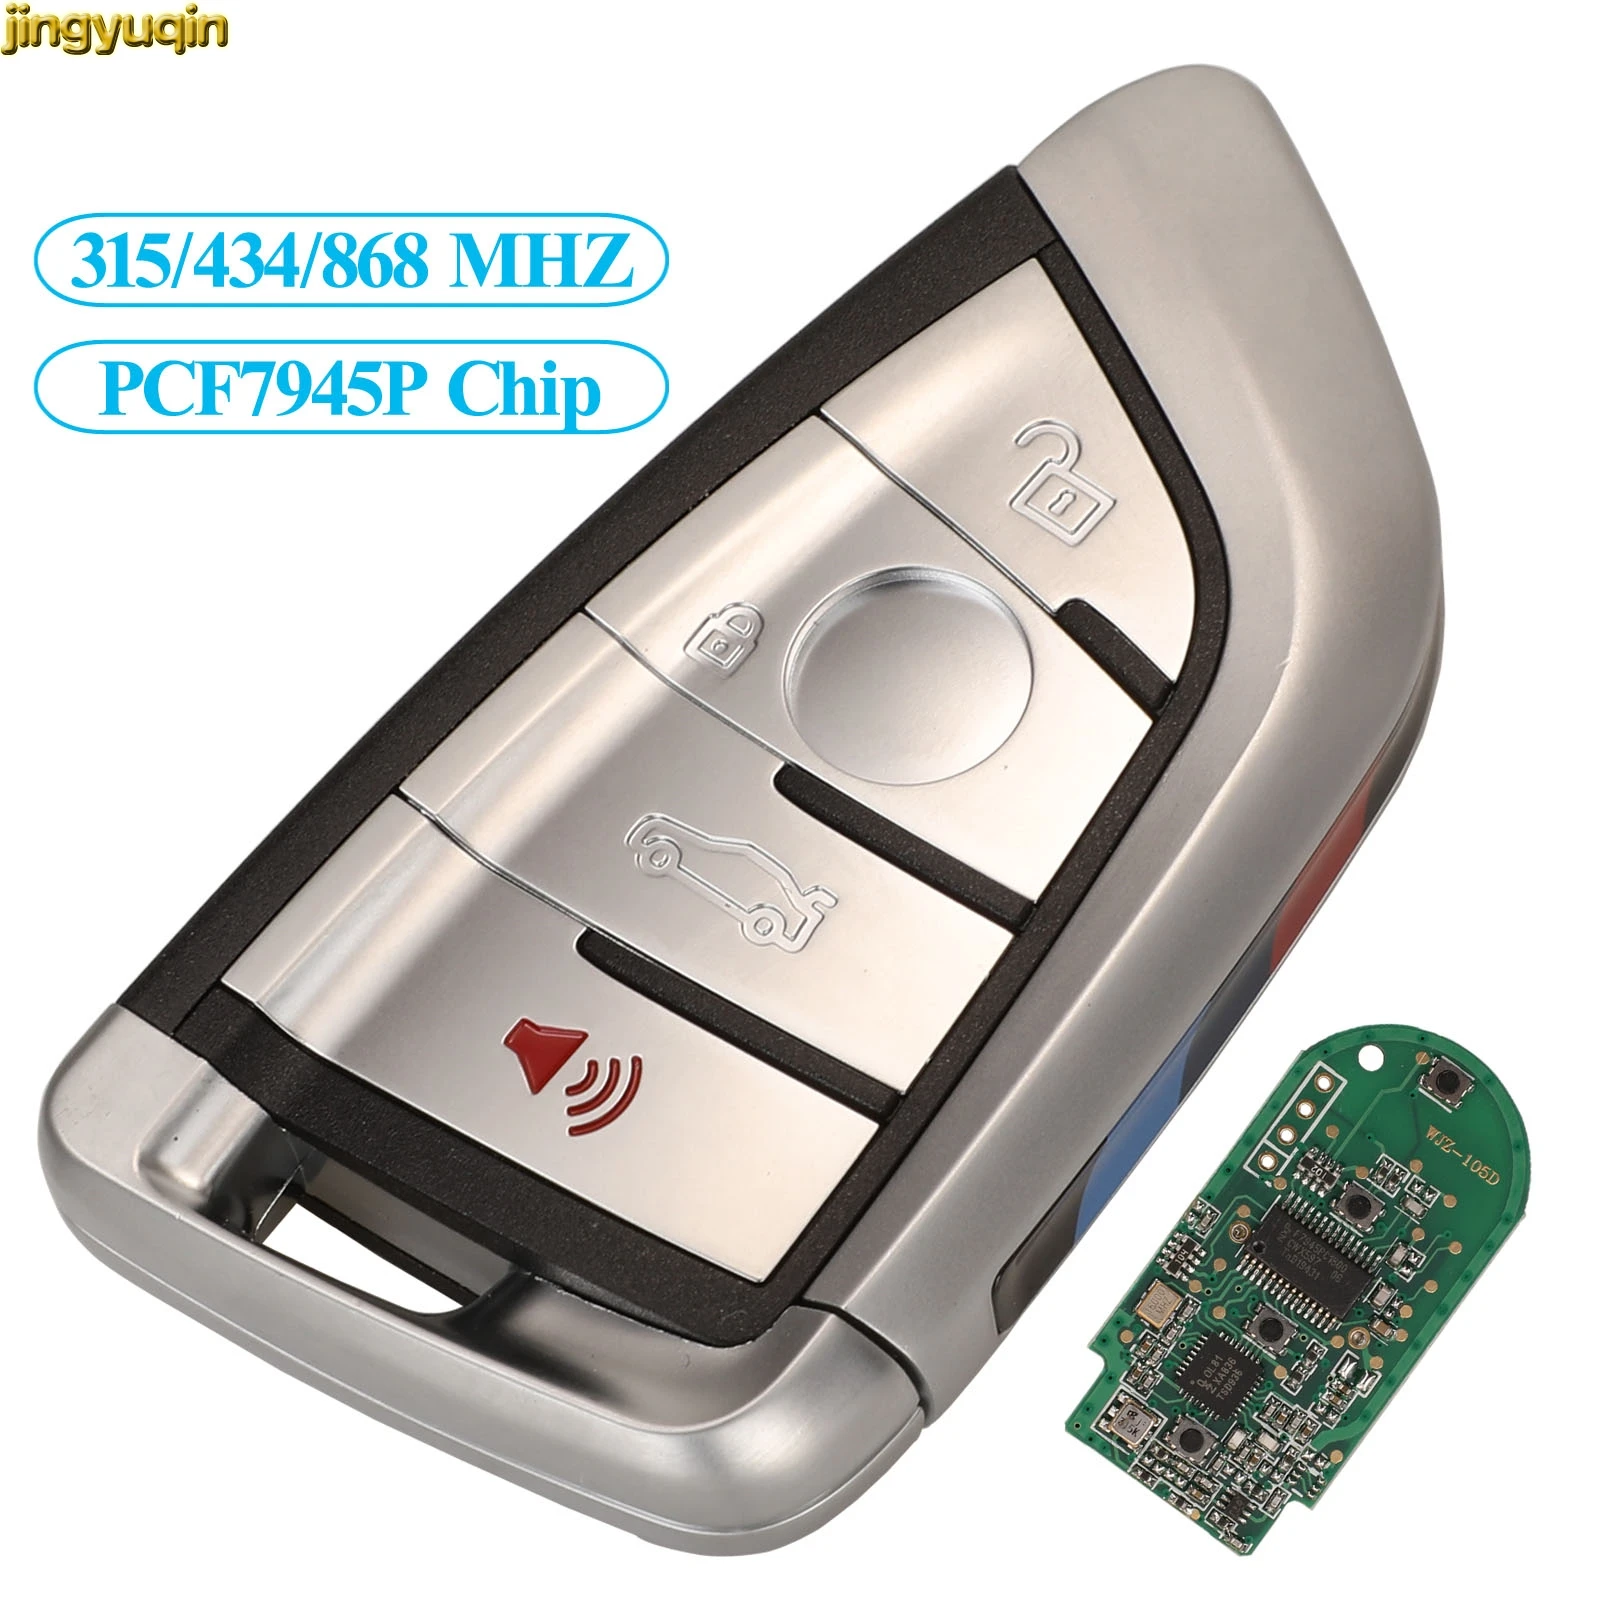 Jingyuqin Remote Car Key Fob Control PCF7945P 315/434/868MHZ For BMW 1 2 3 4 5 6 7 X5 X6 2011-2017 4 Button Smart Card Entry